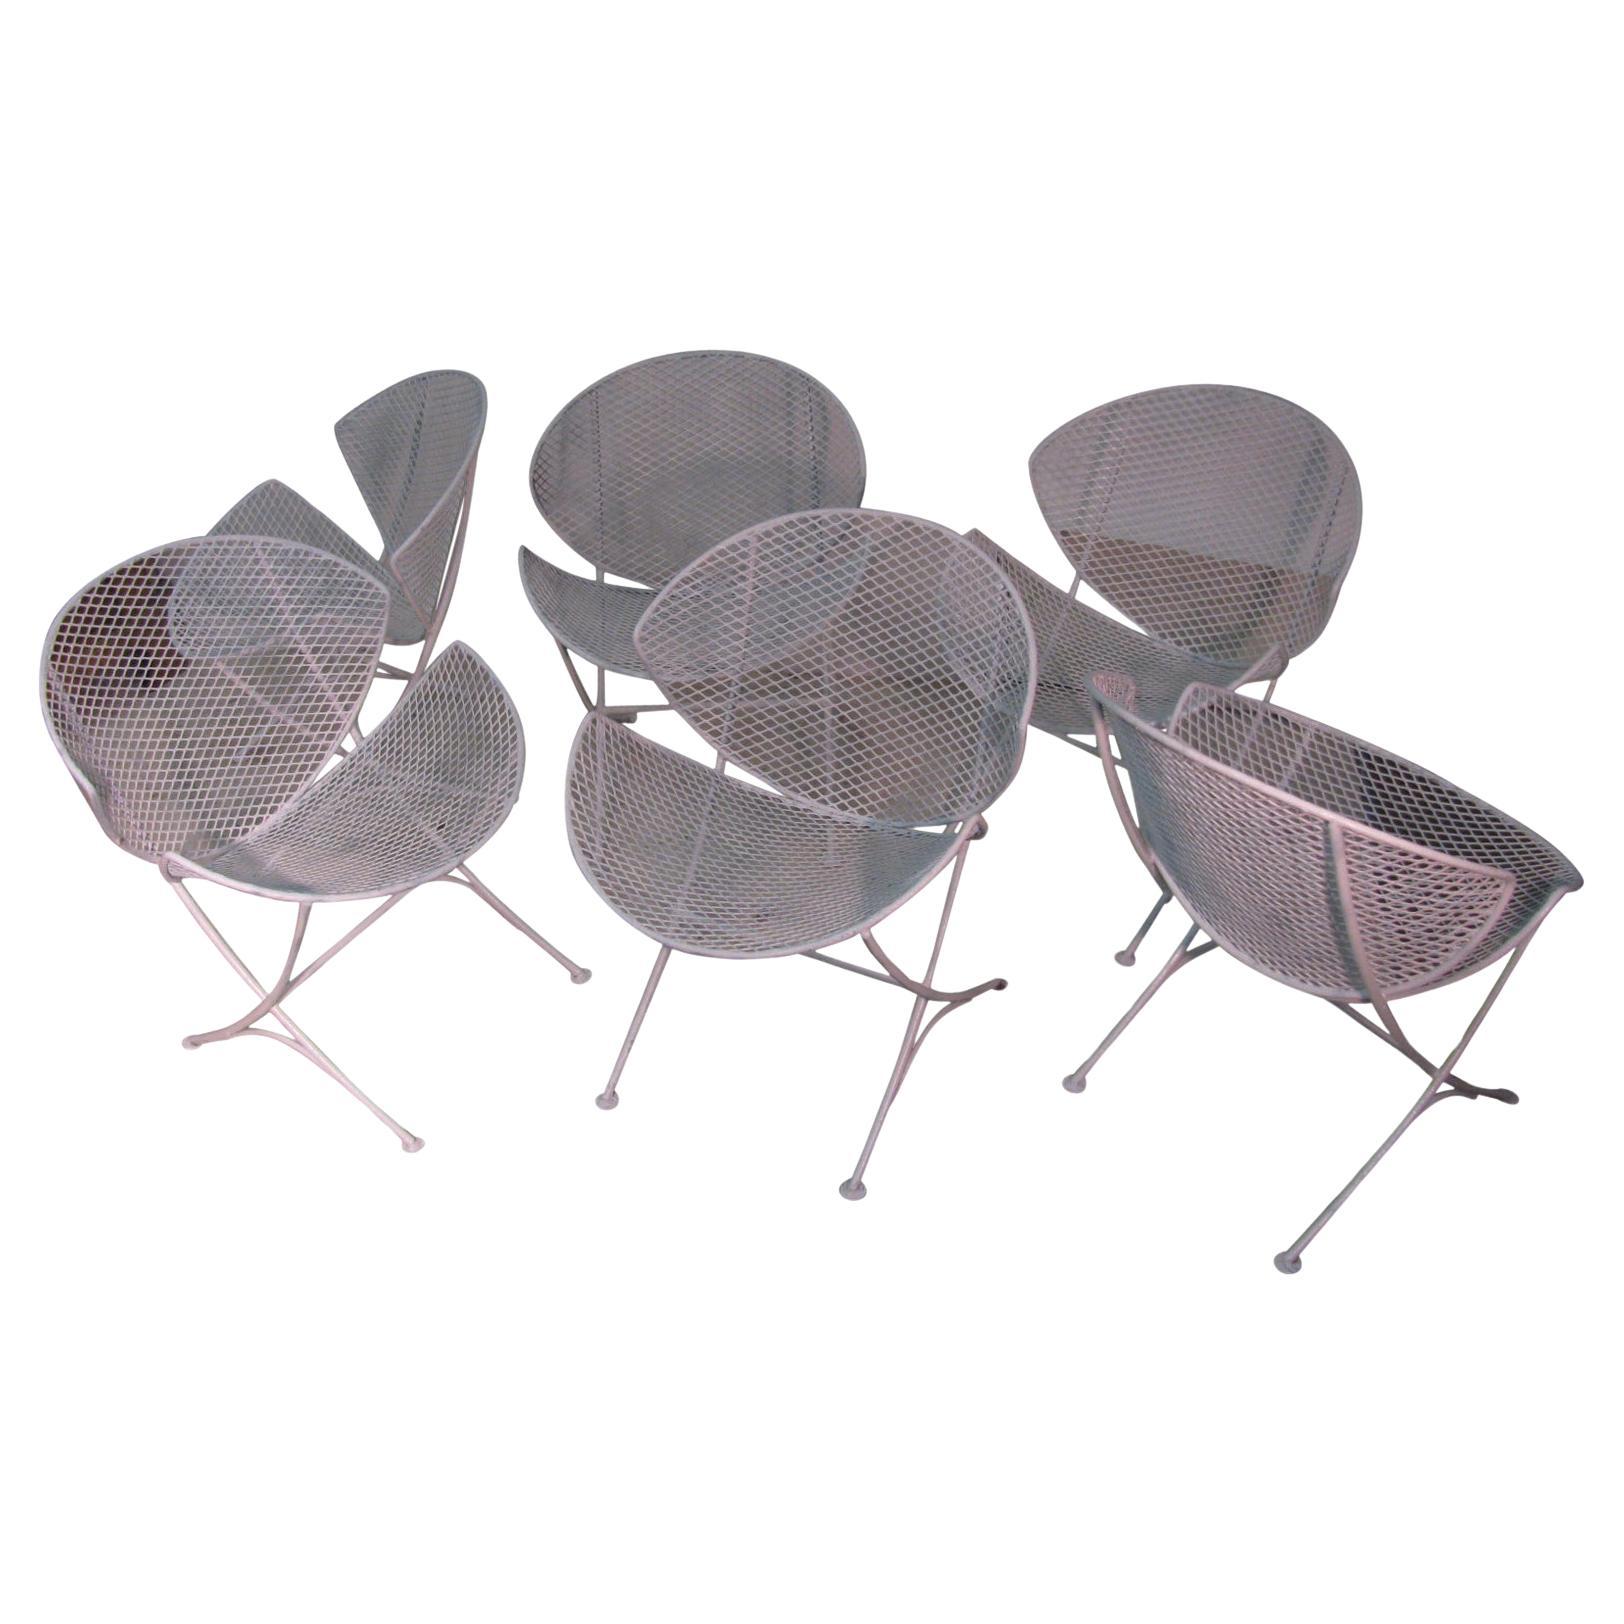 Set 6 Mid Century Modern Orange Slice Chairs by Tempestini & Salterini + a Table